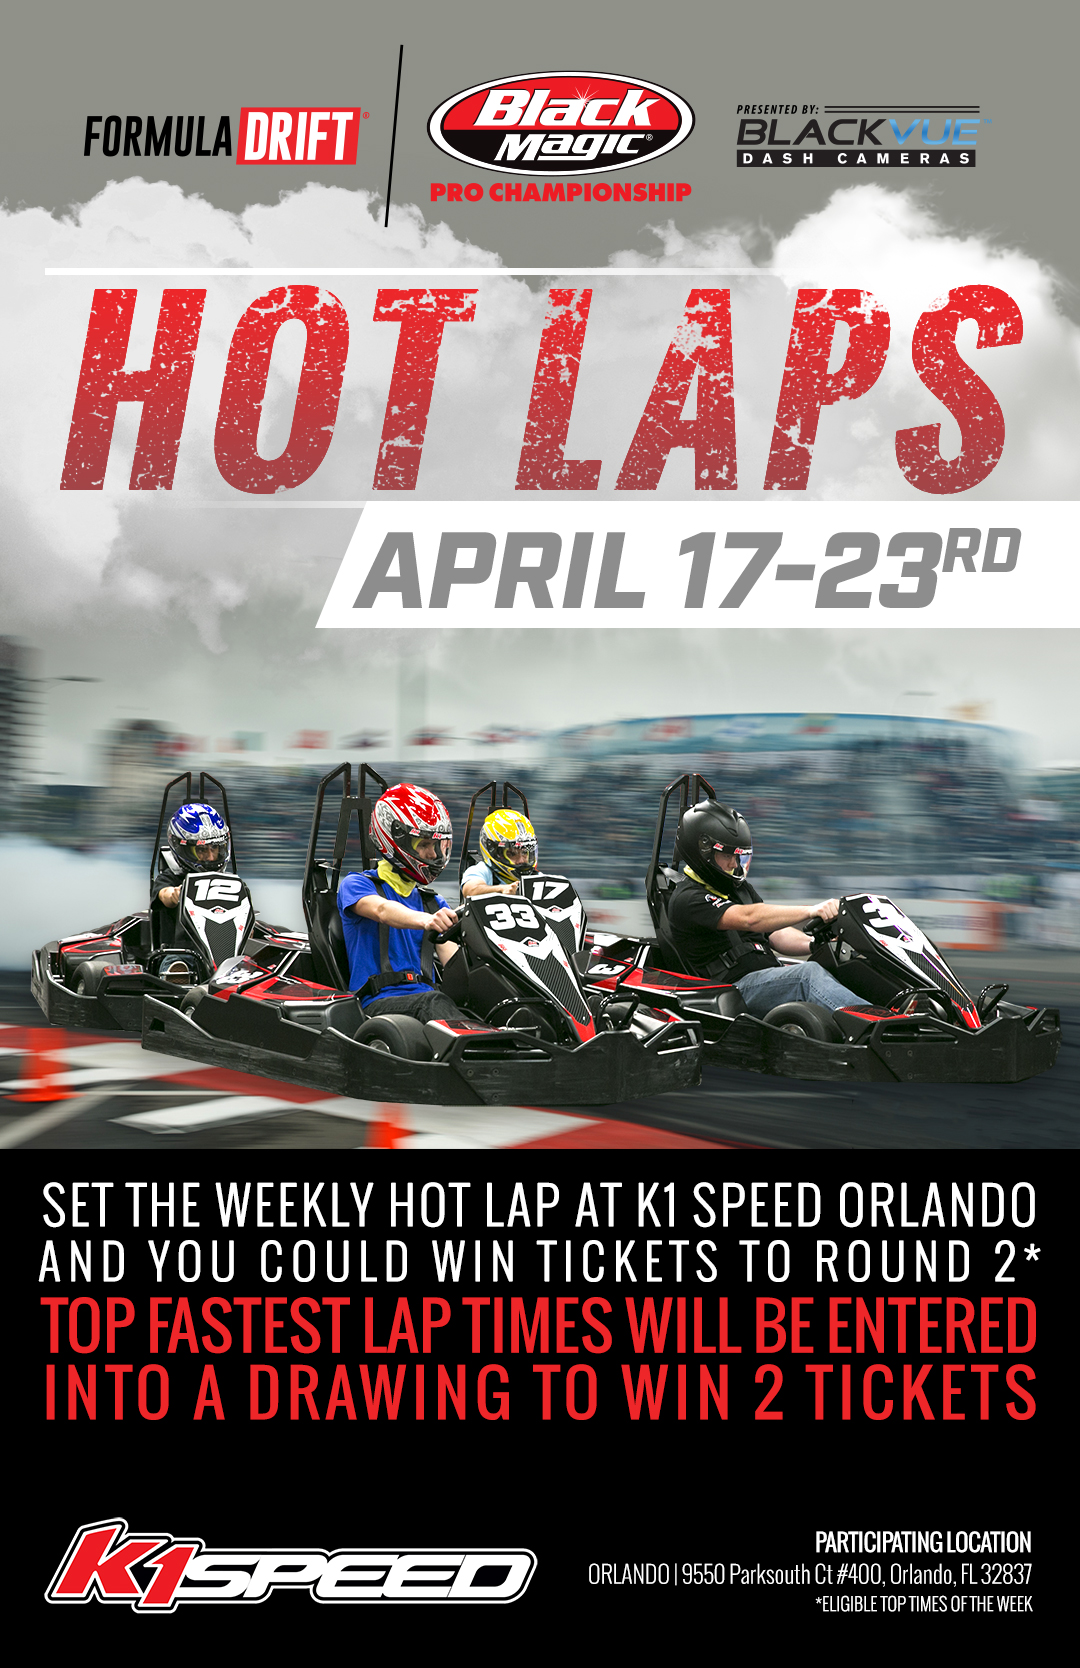 K1 Speed Race To Win Tickets to Formula Drift Orlando